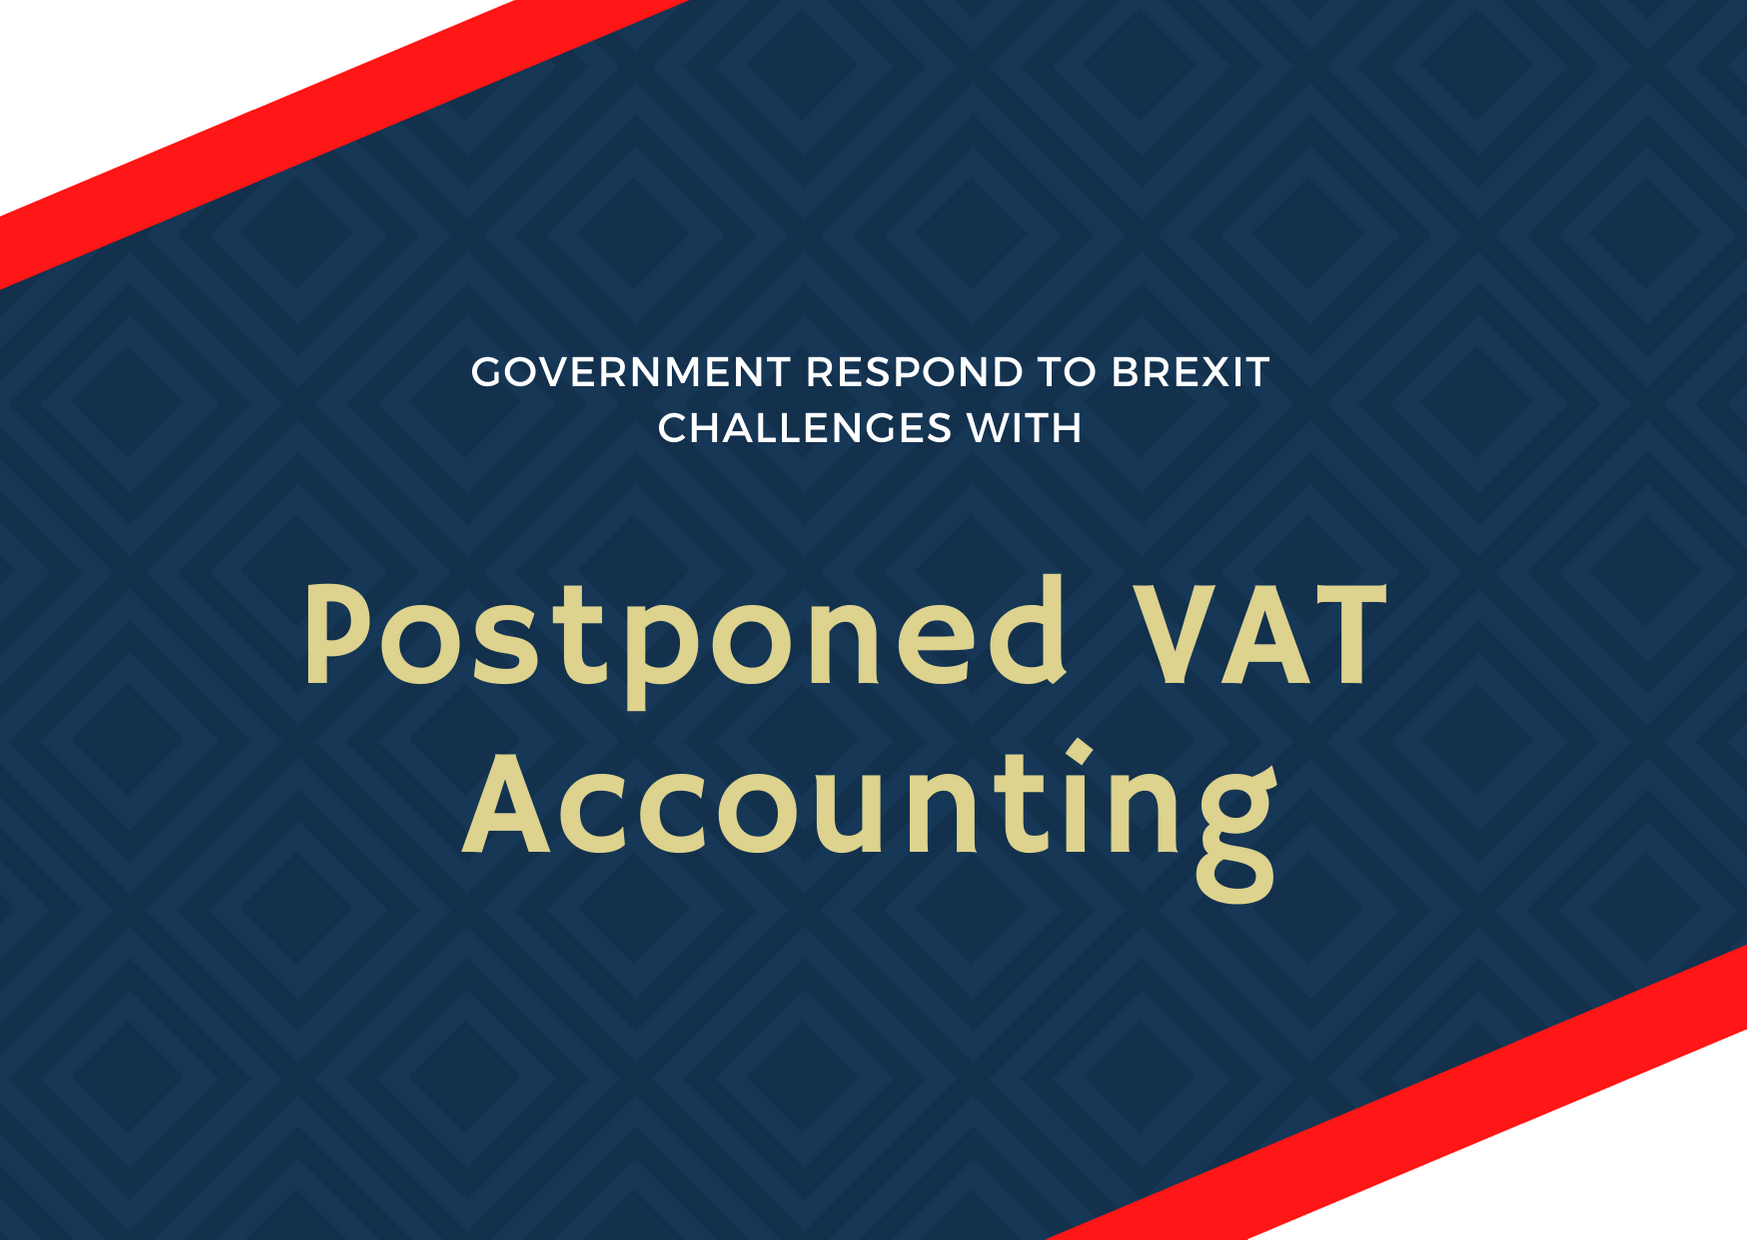 Postponed VAT